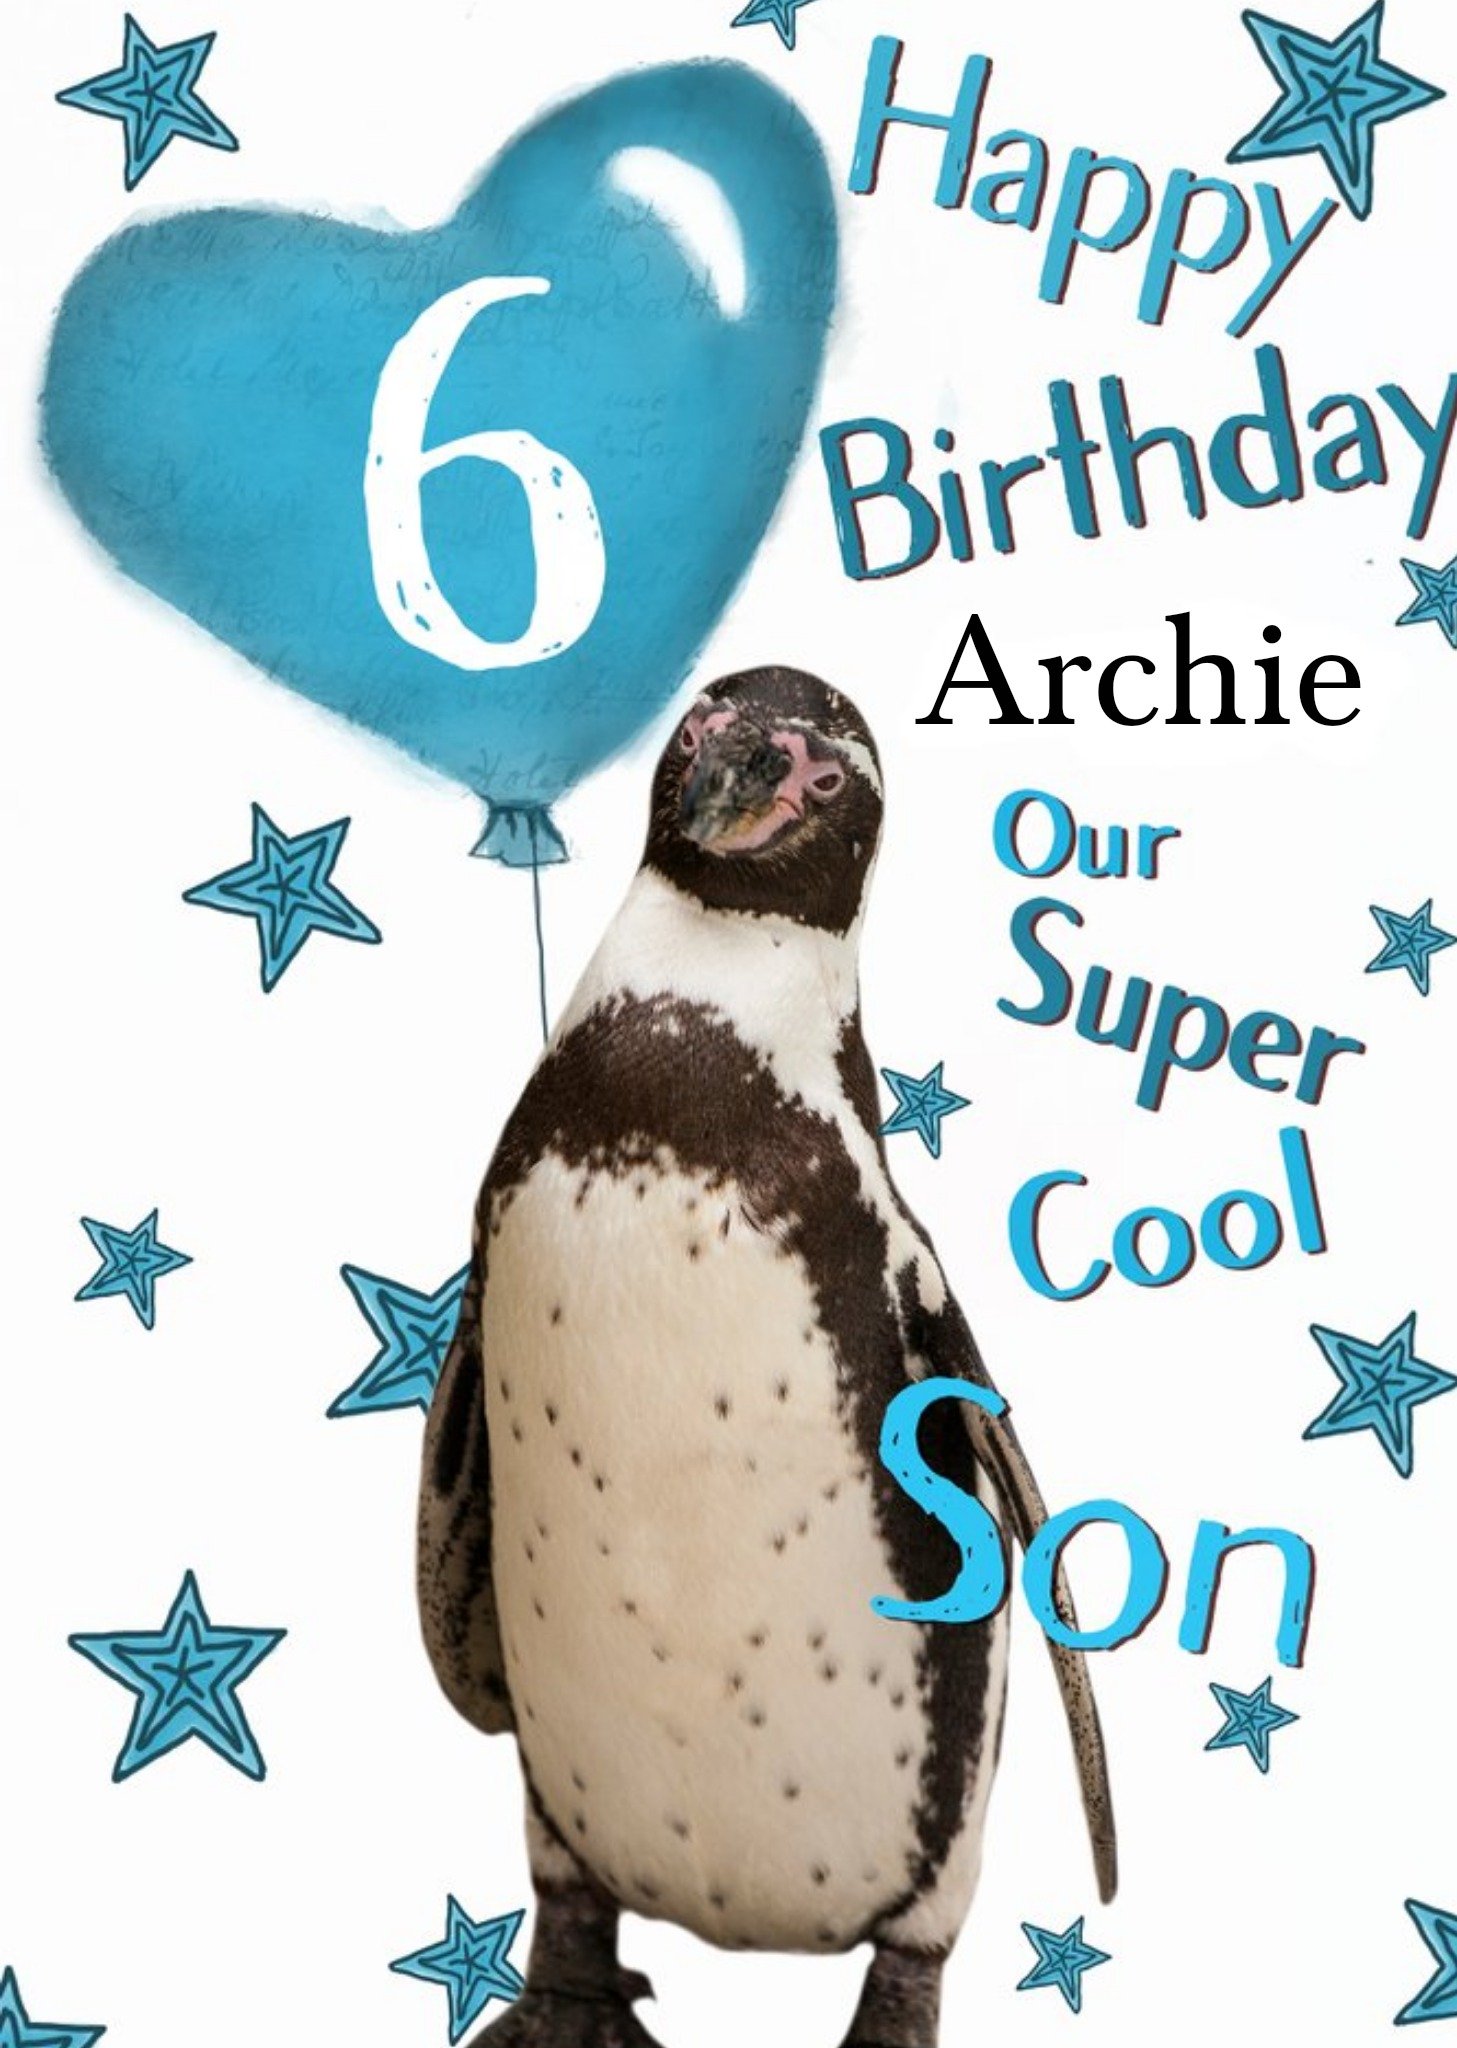 Moonpig Photo Of Penguin With Birthday Balloon Son 6th Birthday Card, Large